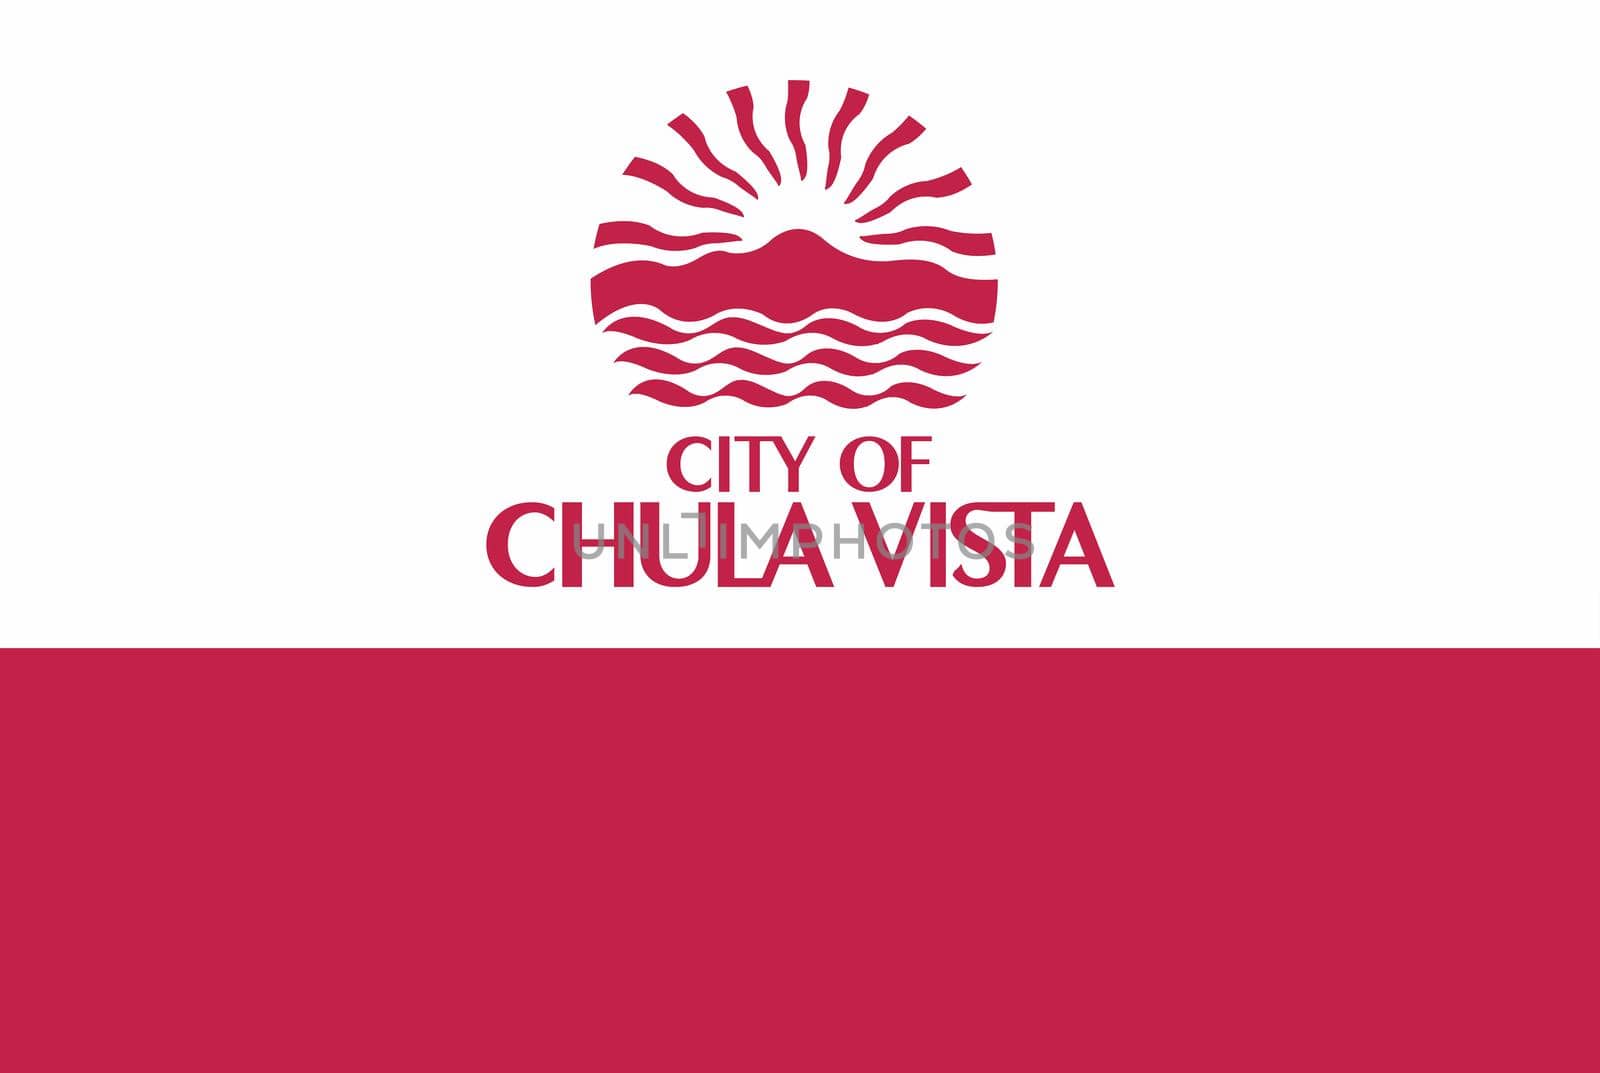 The traditional flag of Chula Vista City flag California